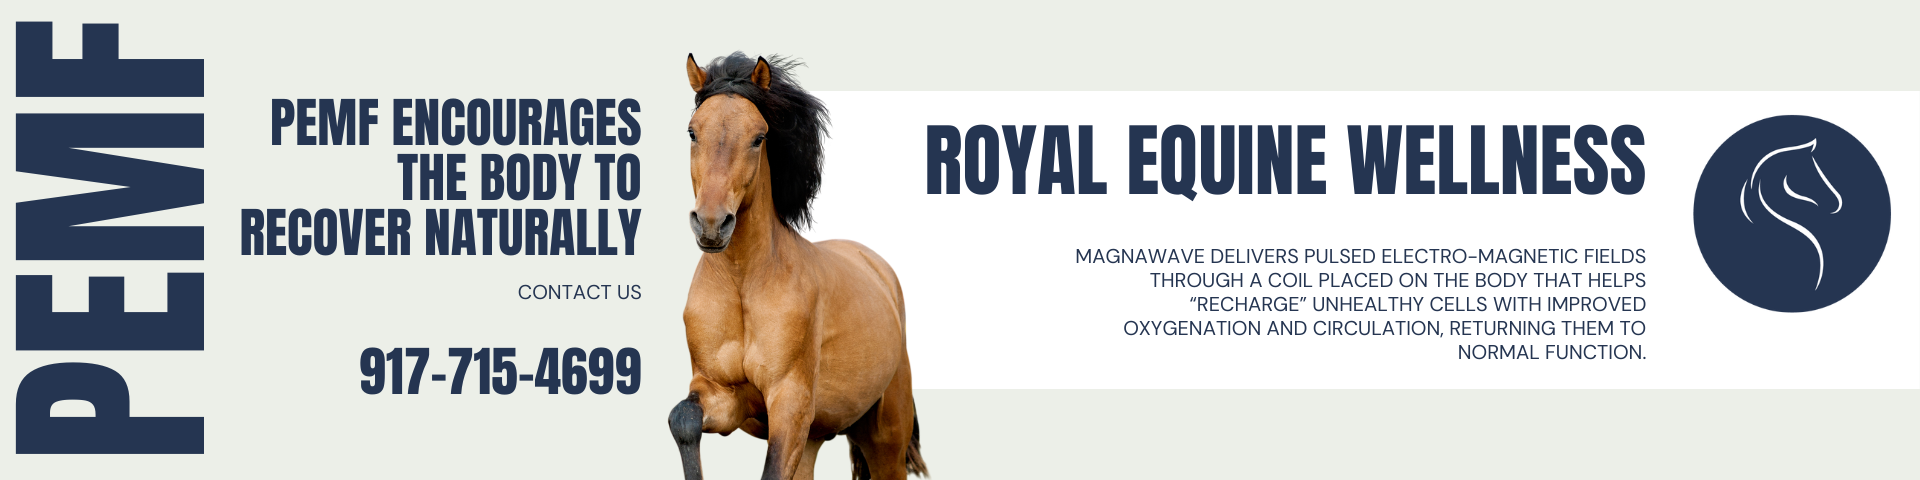 Royal Equine Wellness cover